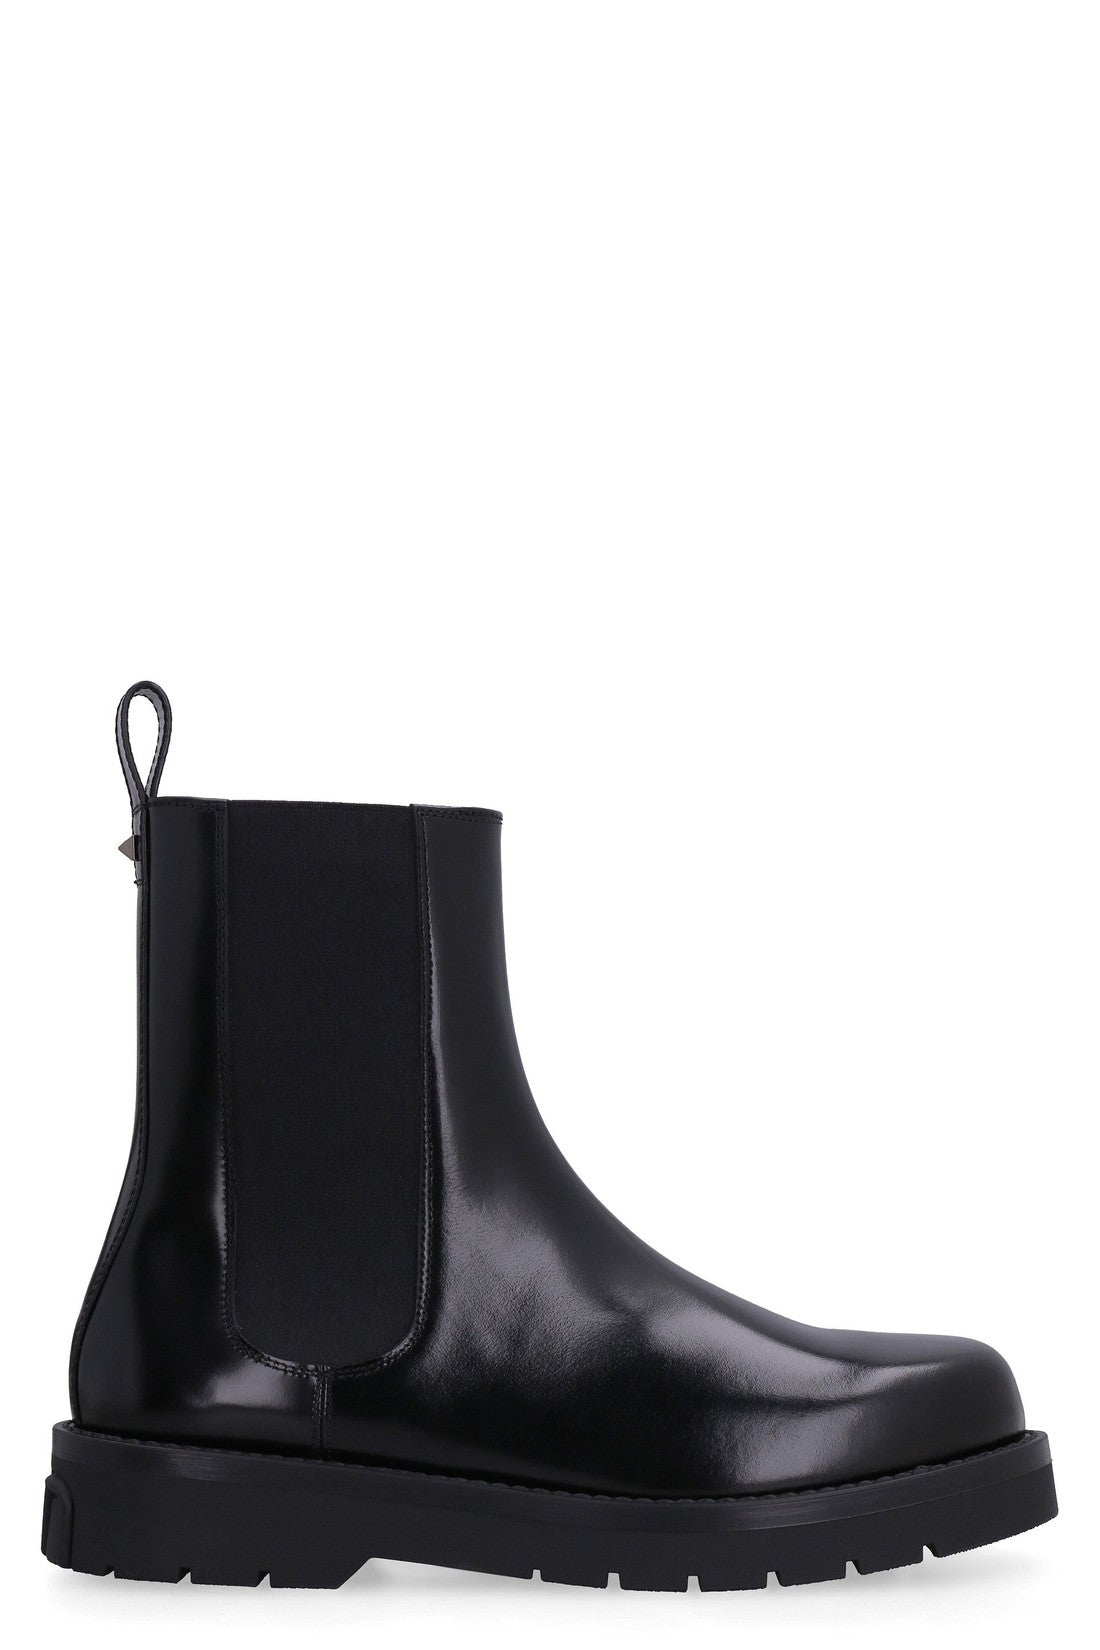 Valentino-OUTLET-SALE-Valentino Garavani - Leather Chelsea boots-ARCHIVIST